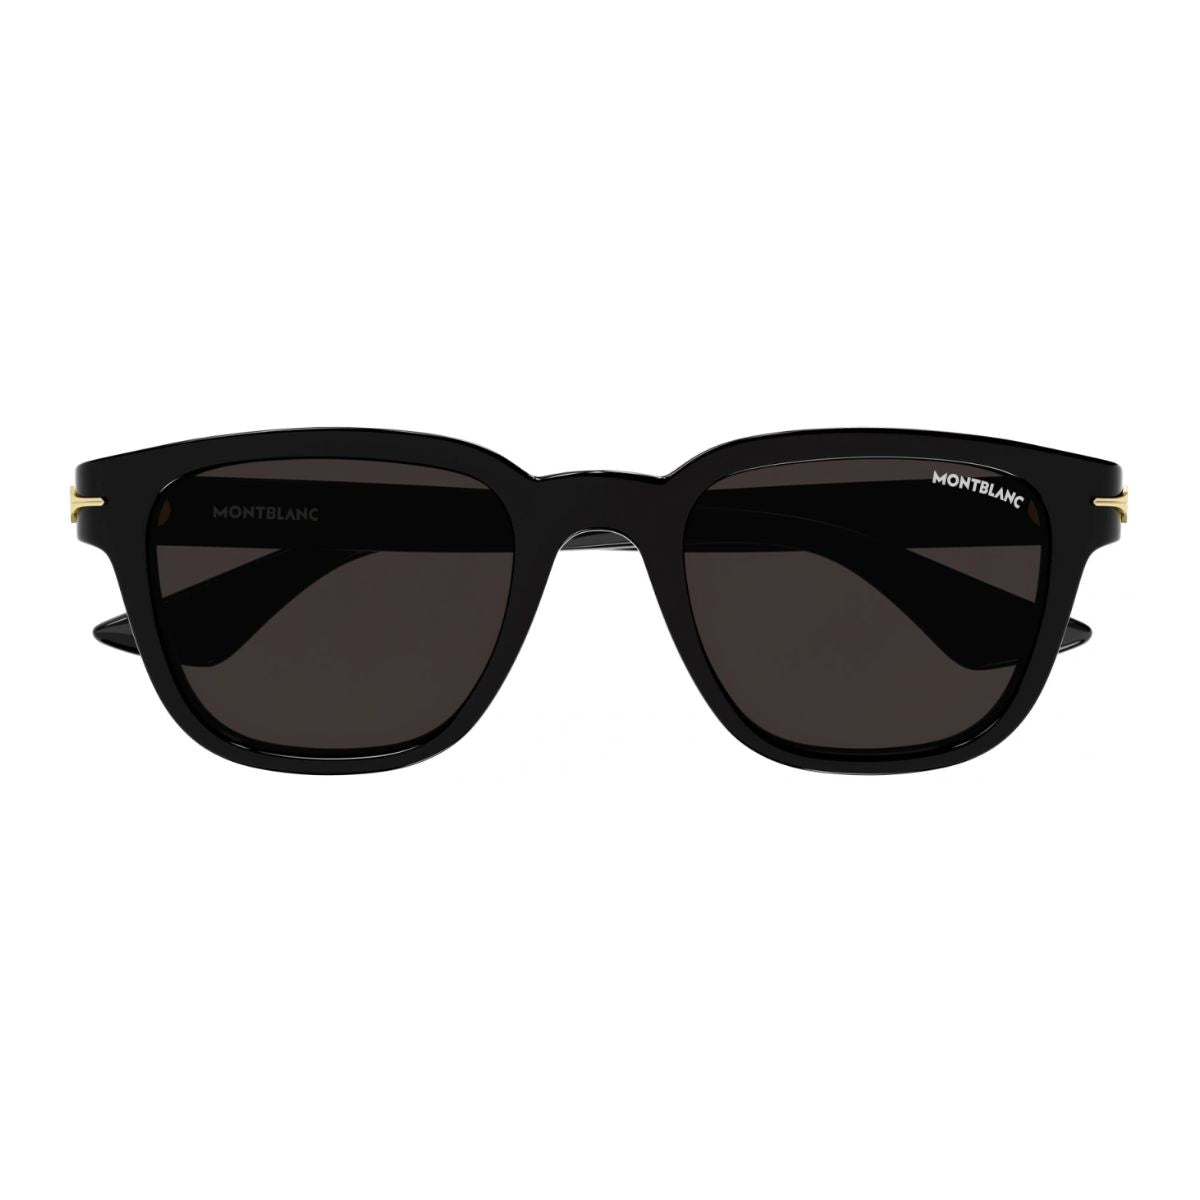 "Buy Stylish Mont Blanc Square Sunglasses For Mens At Optorium"